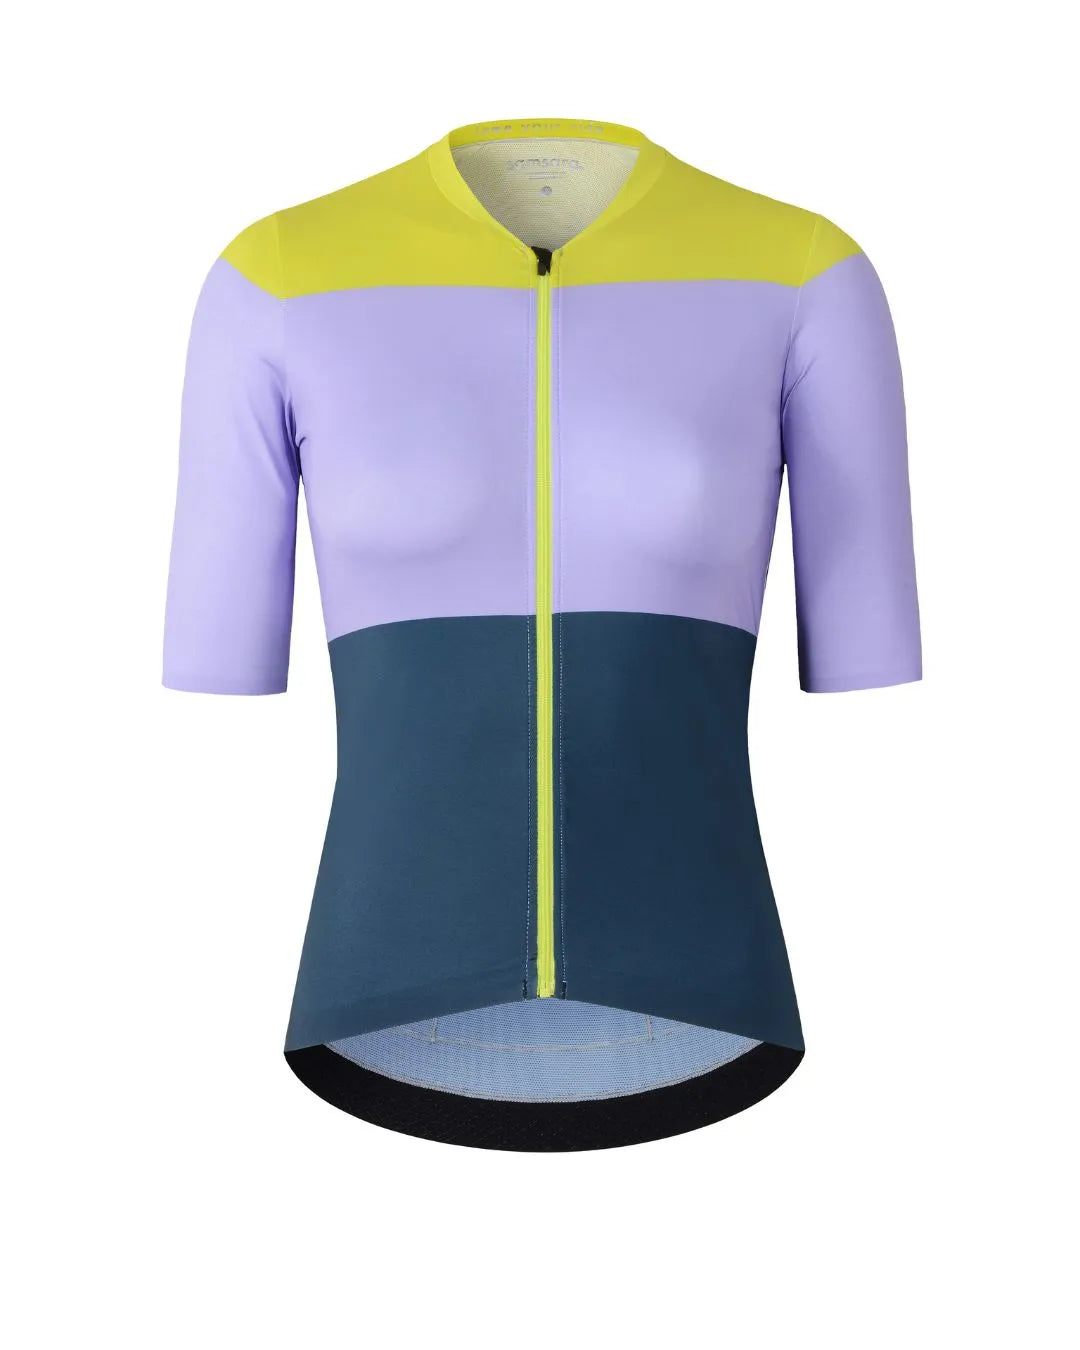 Endurance Cycling Jersey - Moonlit Harbor, Short Sleeve Jerseys, Samsara Cycle, Bicycle Jerseys